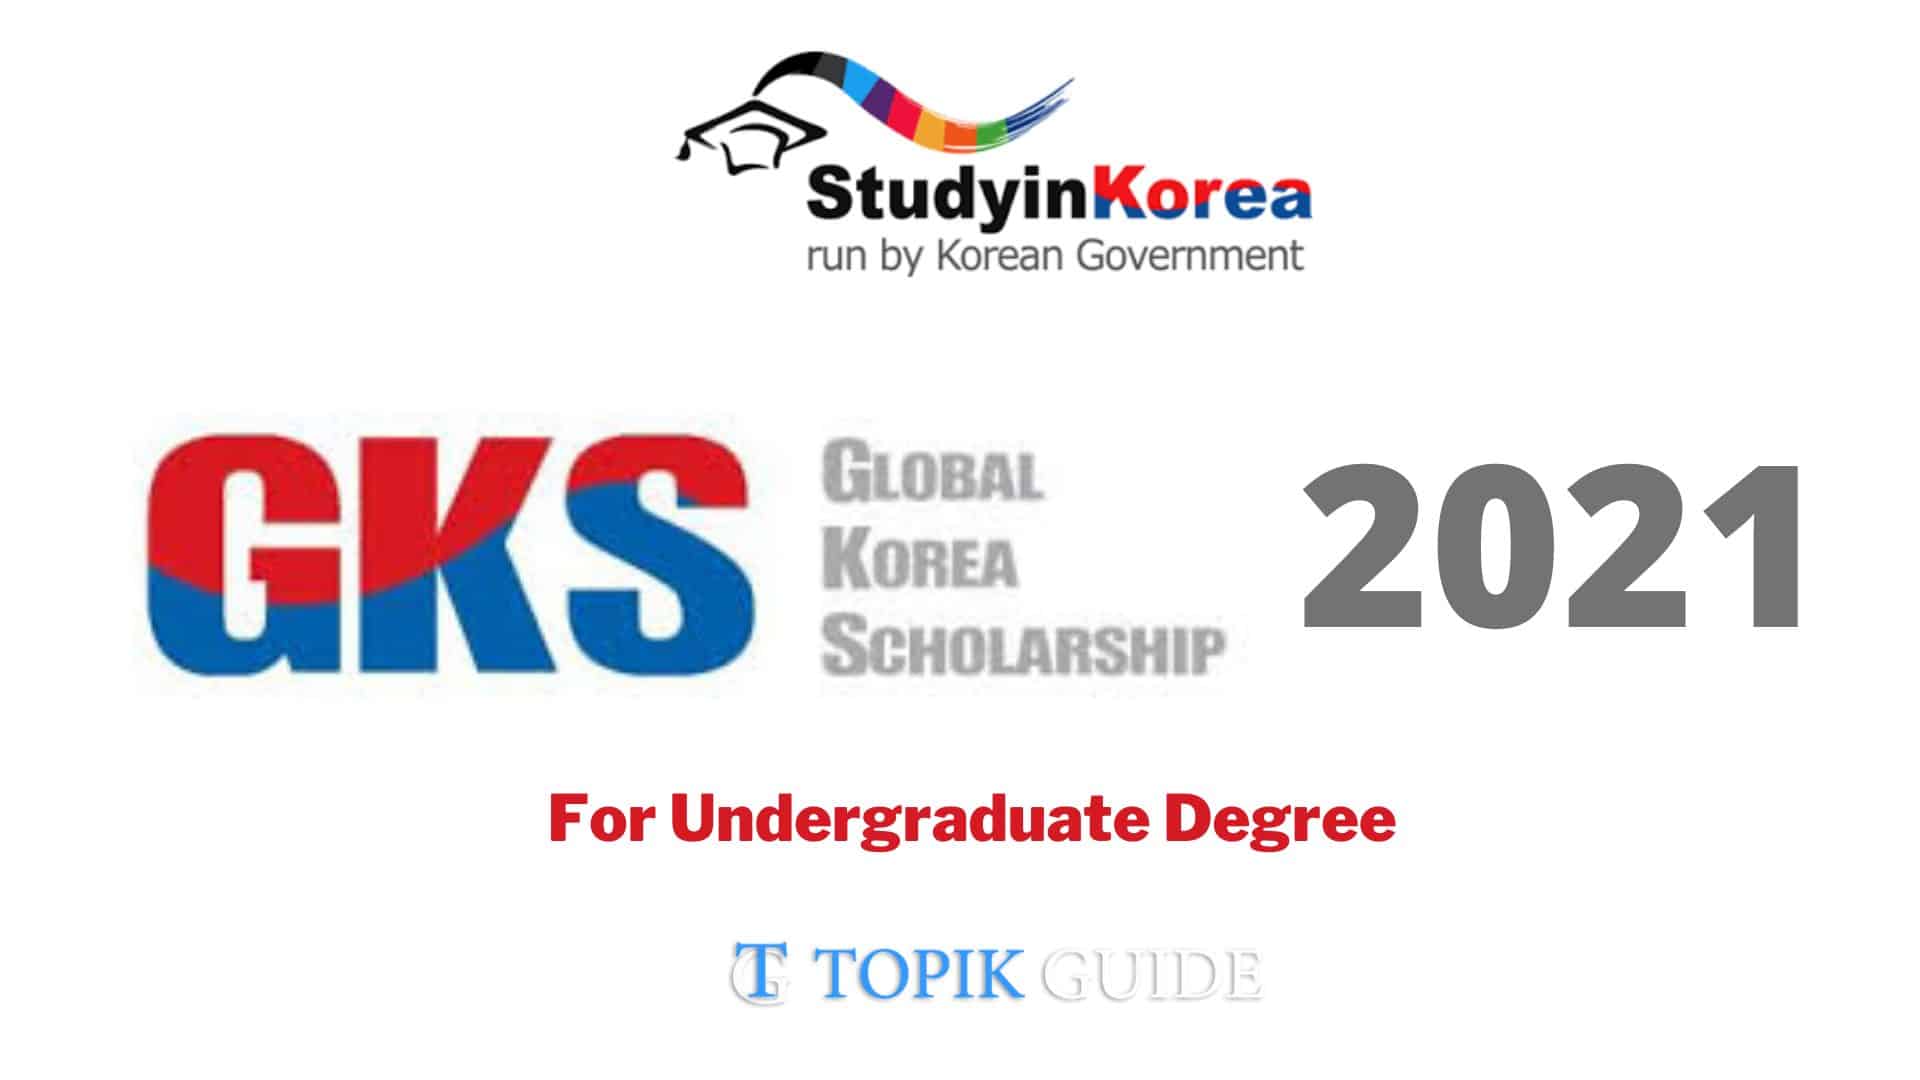 Global Korea Scholarship for Undergraduate Degree 2021 For Indian